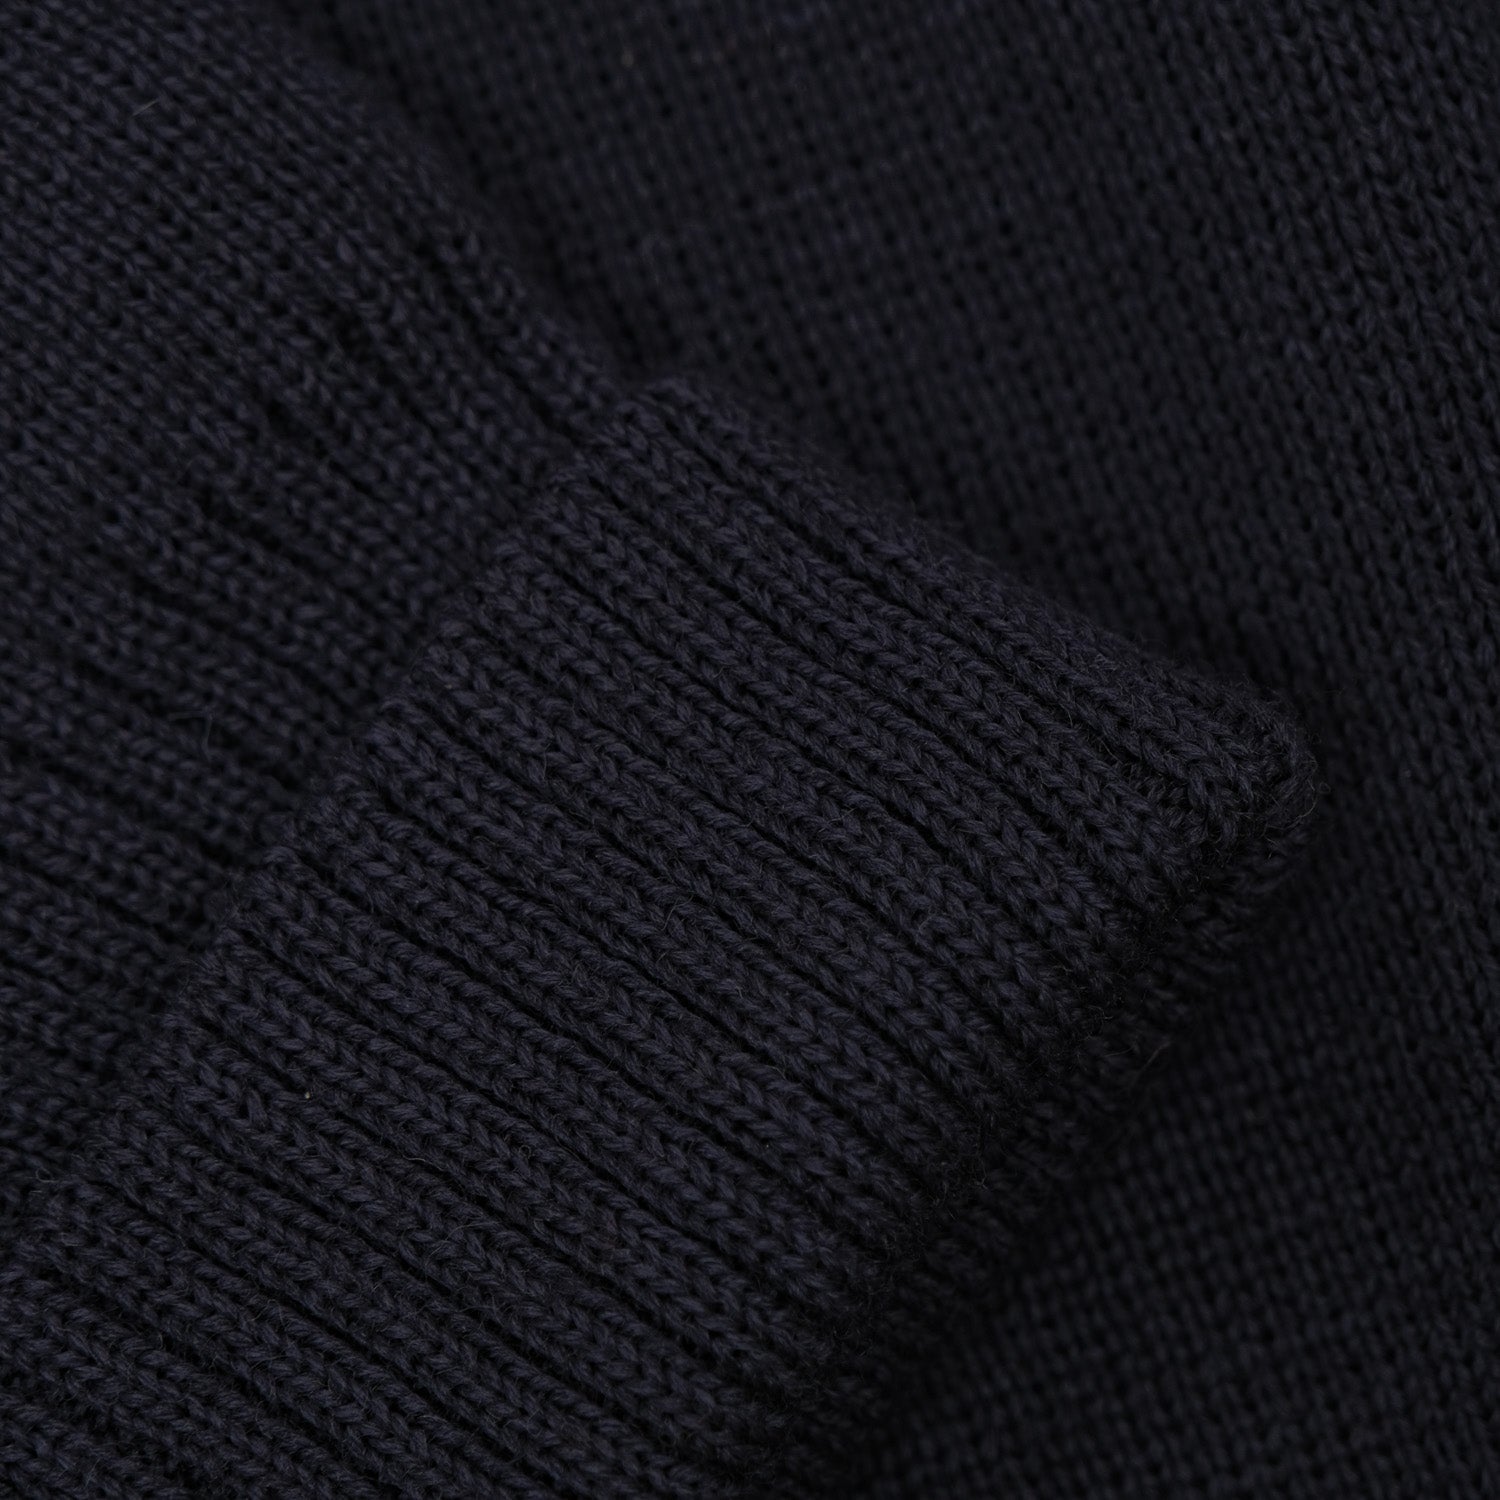 OFF WHITE JERSEY Men's sweater | BRUT Vintage Shop | Worldwide shipping ...